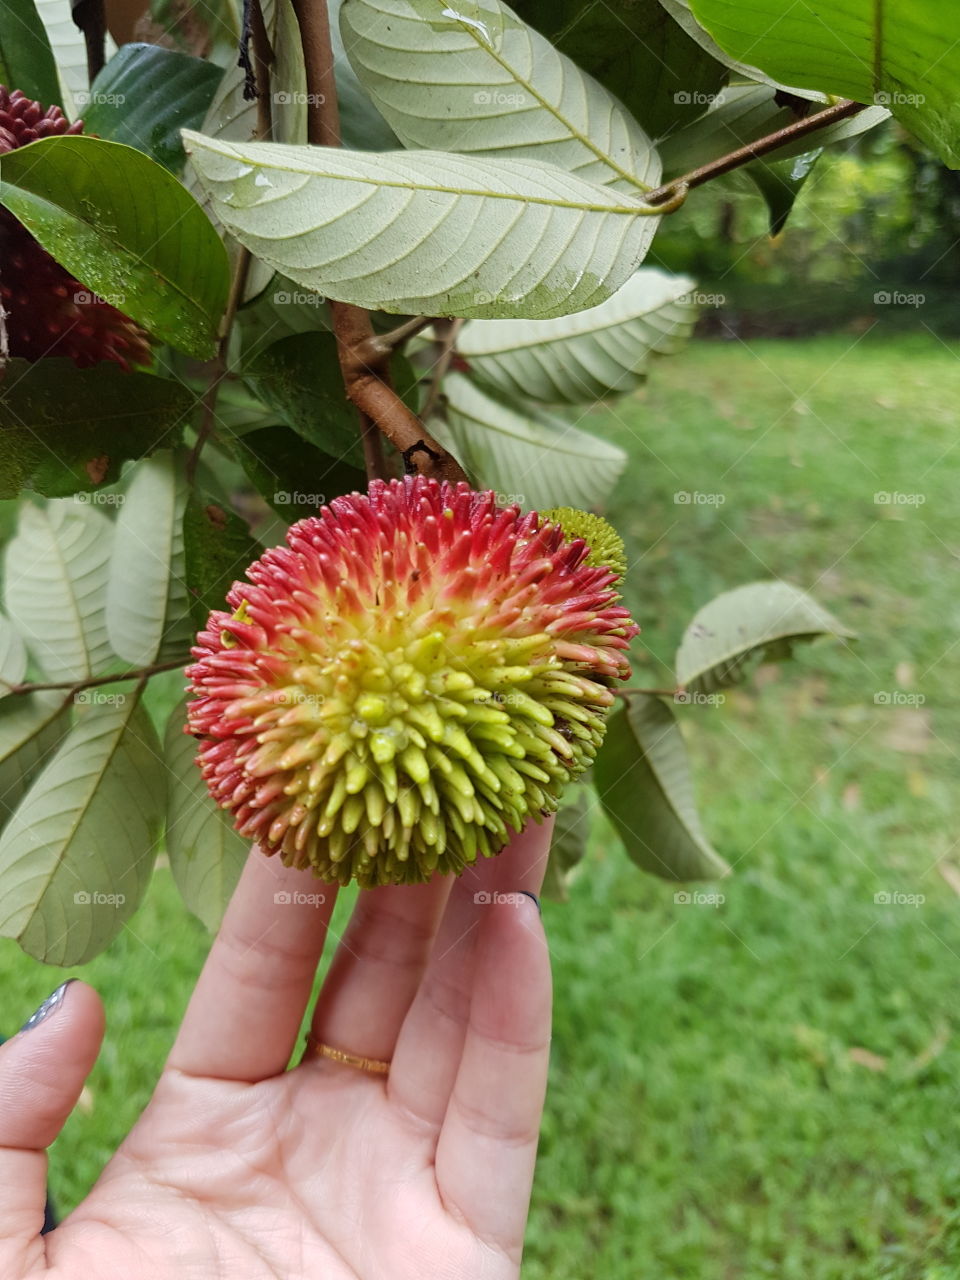 Indo-rambutan ; wild fruite rare in Thailand.